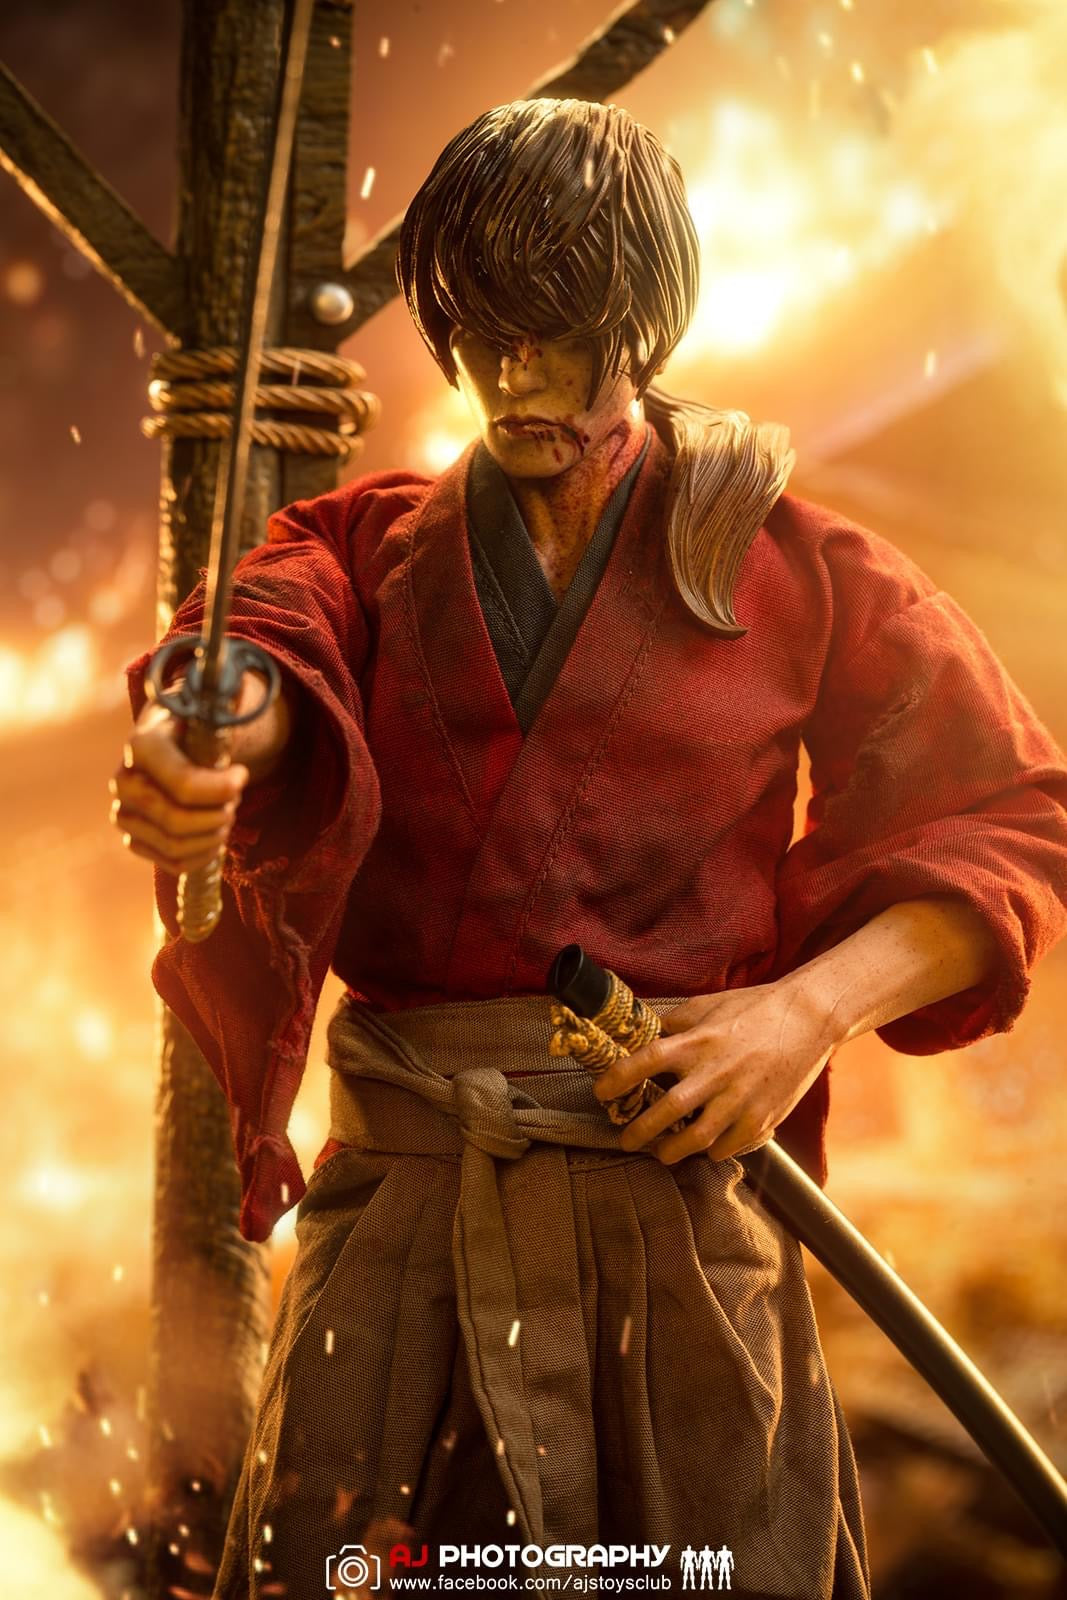 Pedido Figura Samurai (Final Battle Edition) marca VTS Toys VM043B  escala 1/6